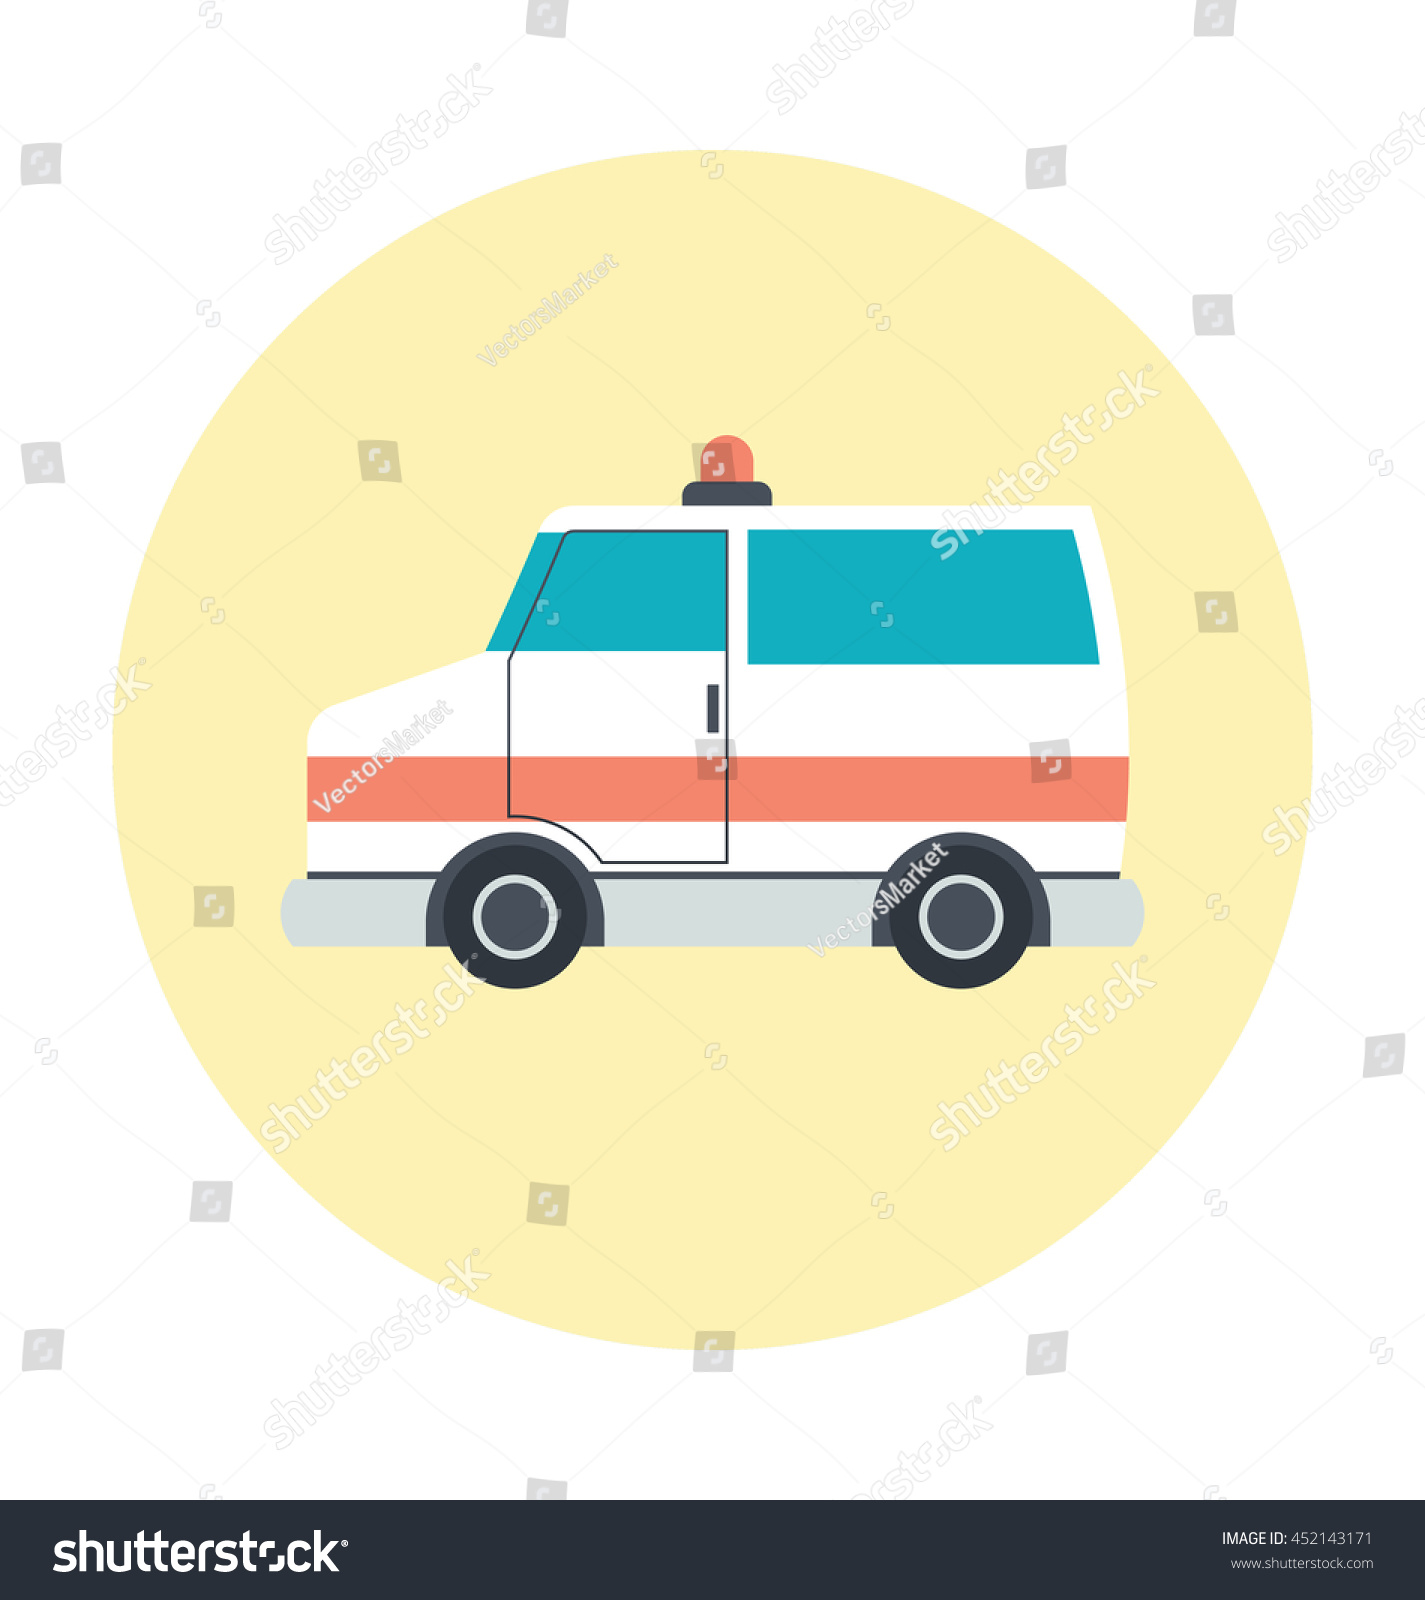 Ambulance Vector Icon - 452143171 : Shutterstock